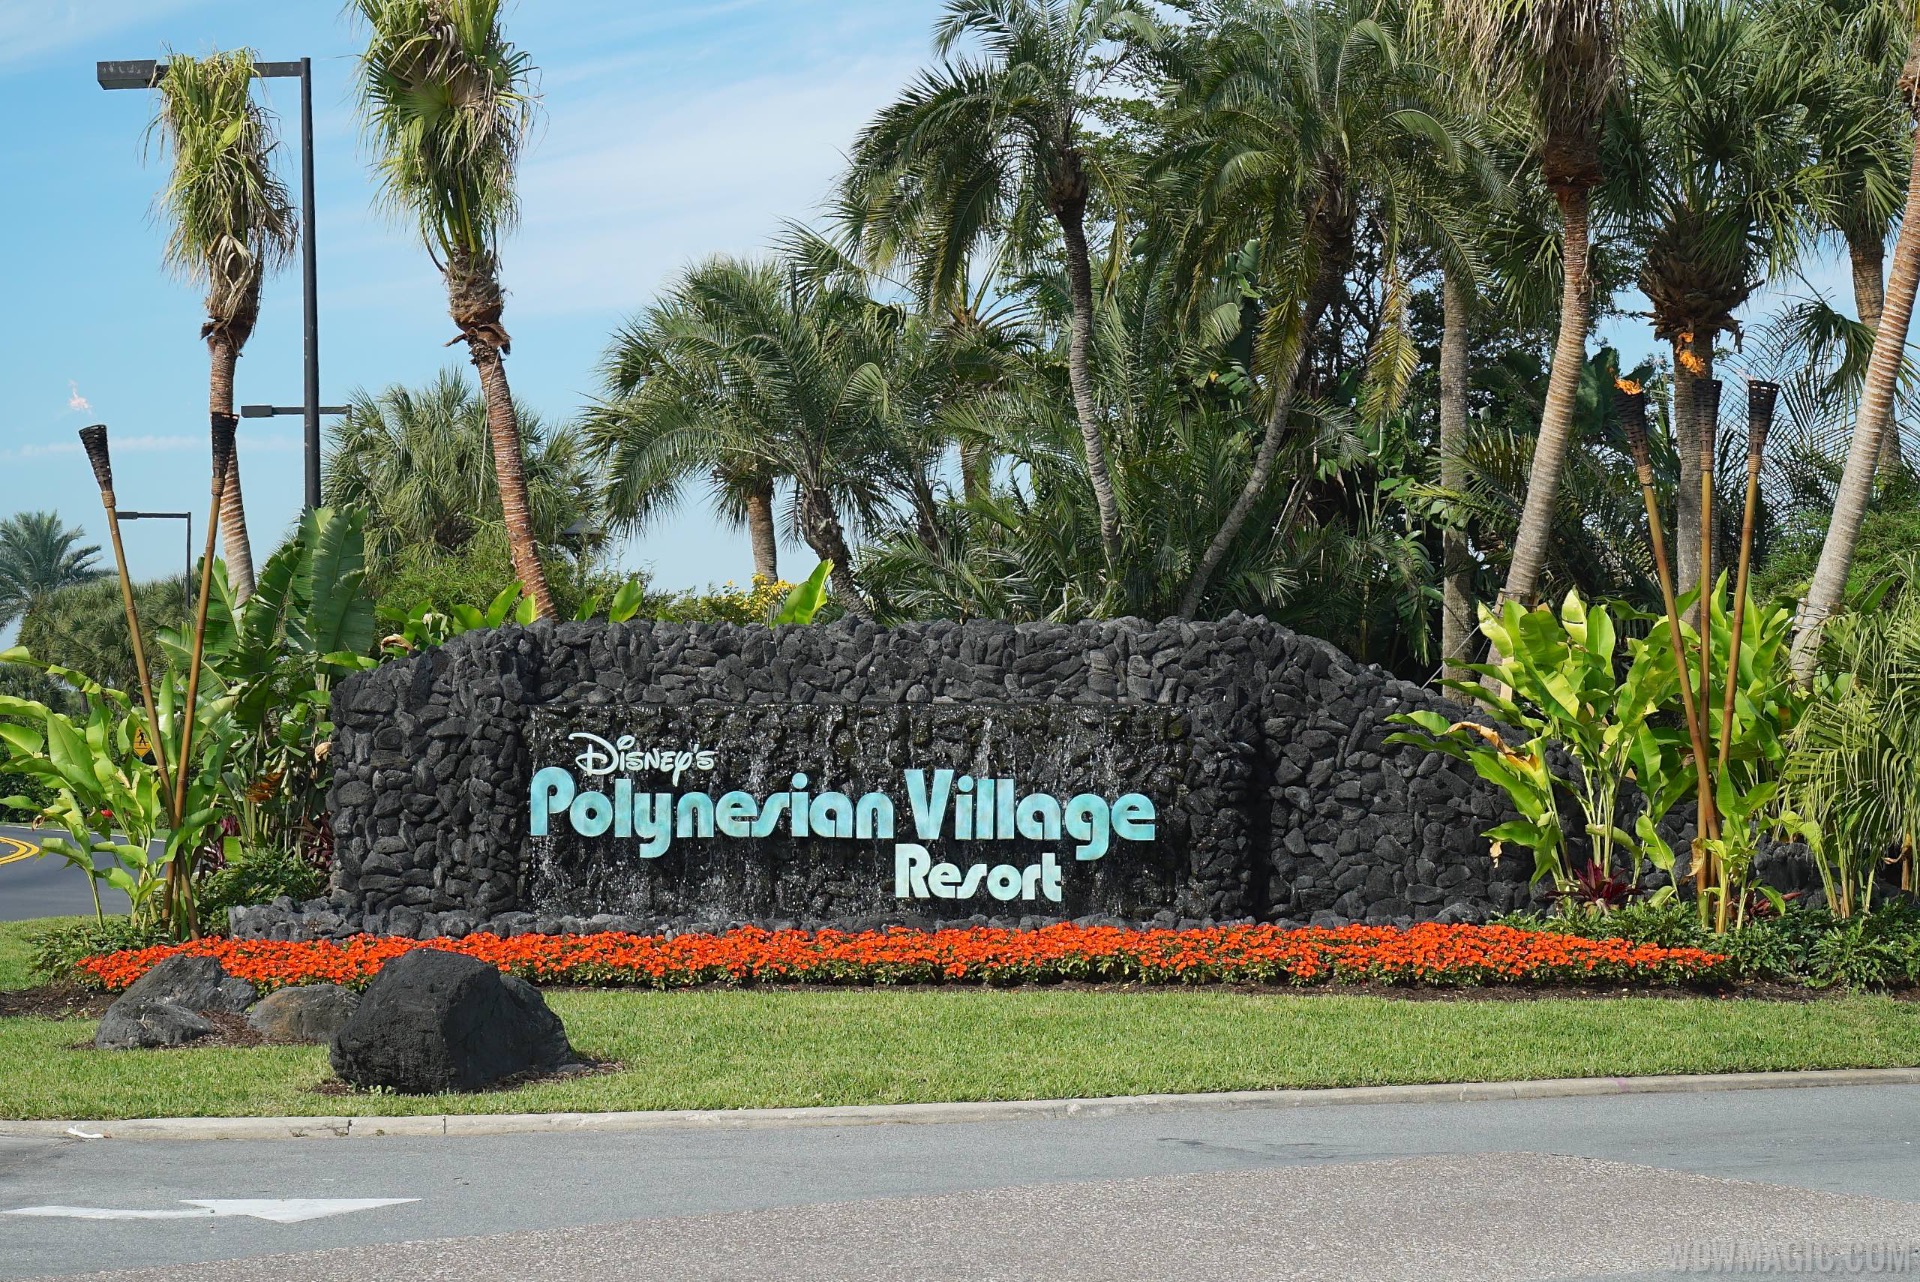 Disneys-Polynesian-Resort_Full_22397-4.jpg